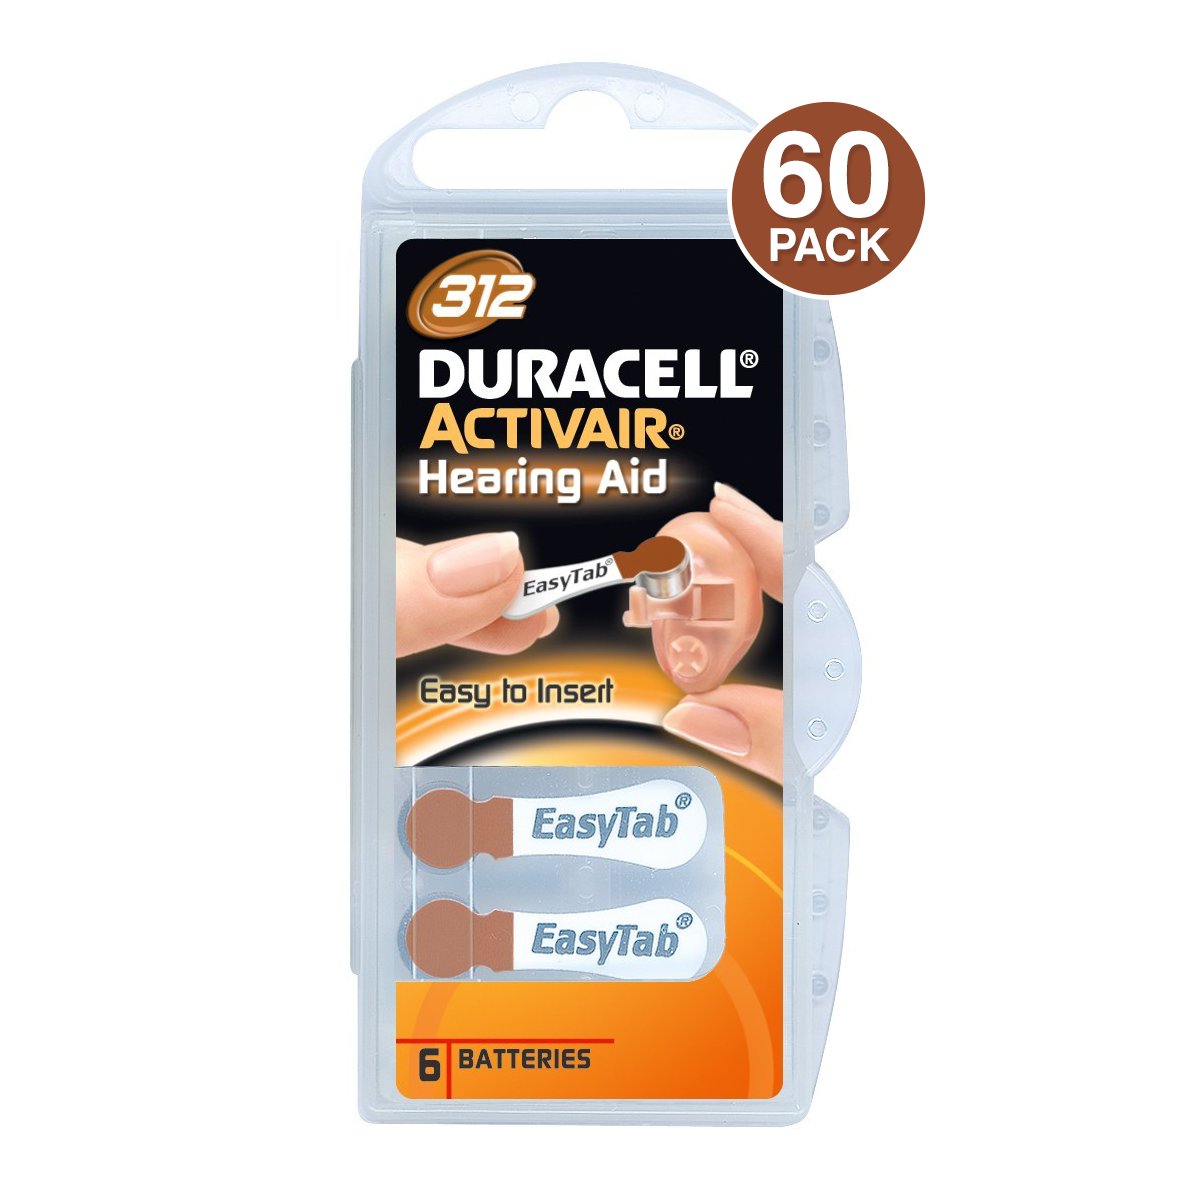 Duracell Activair 312 Hearing Aid Battery (60 PCS)